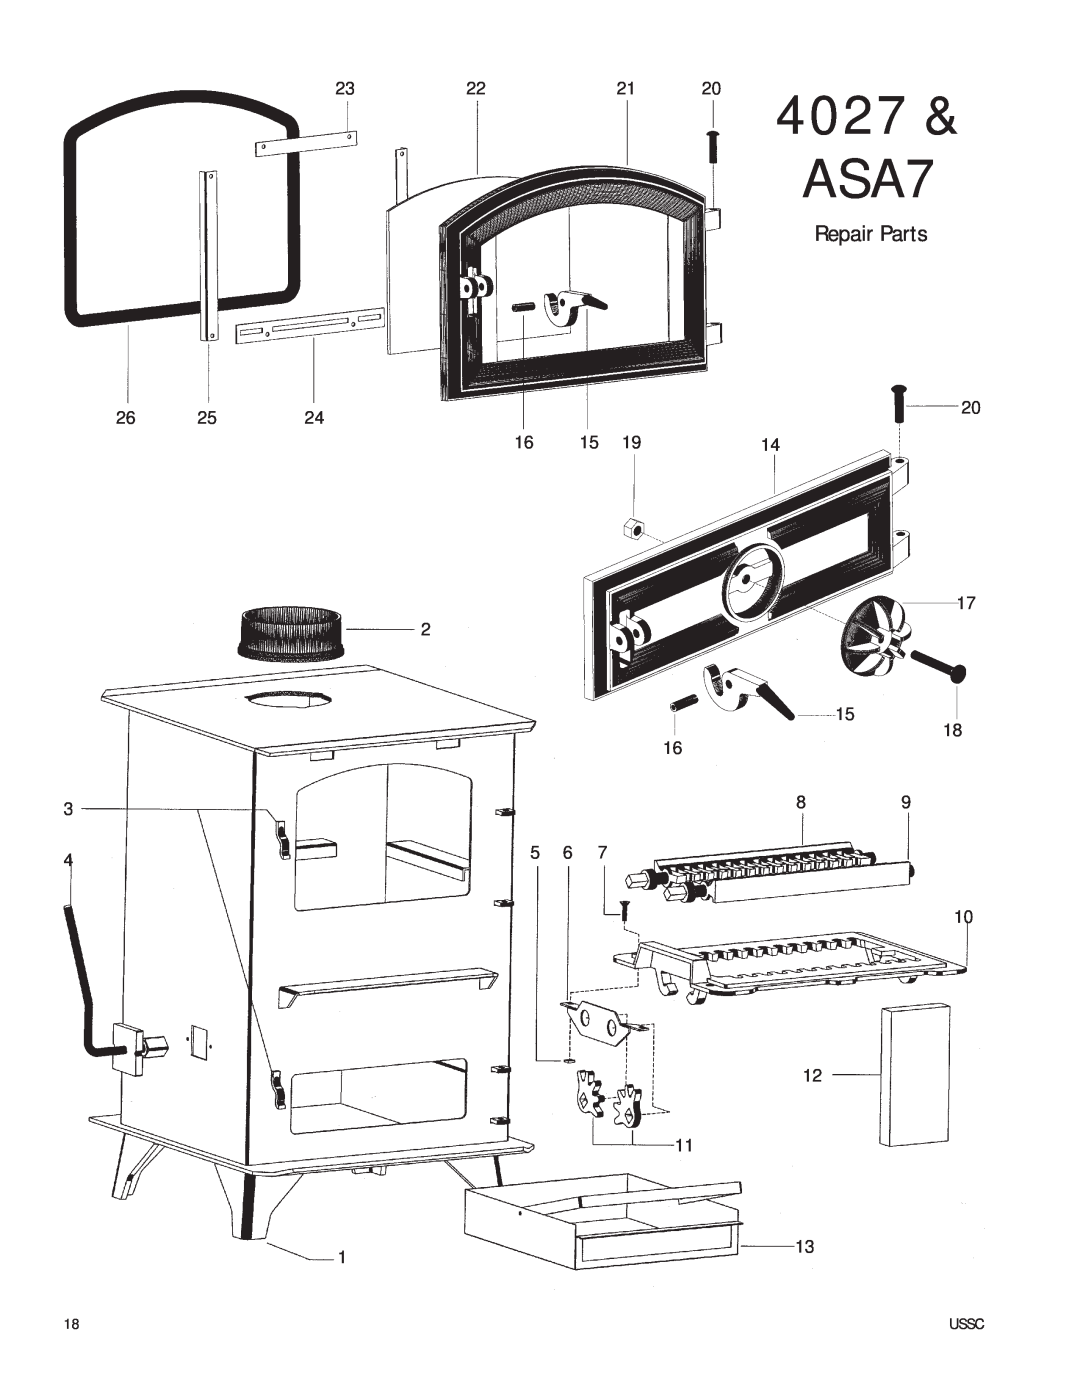 United States Stove owner manual 204027 & ASA7, Repair Parts, 8 10 12 11, Ussc 